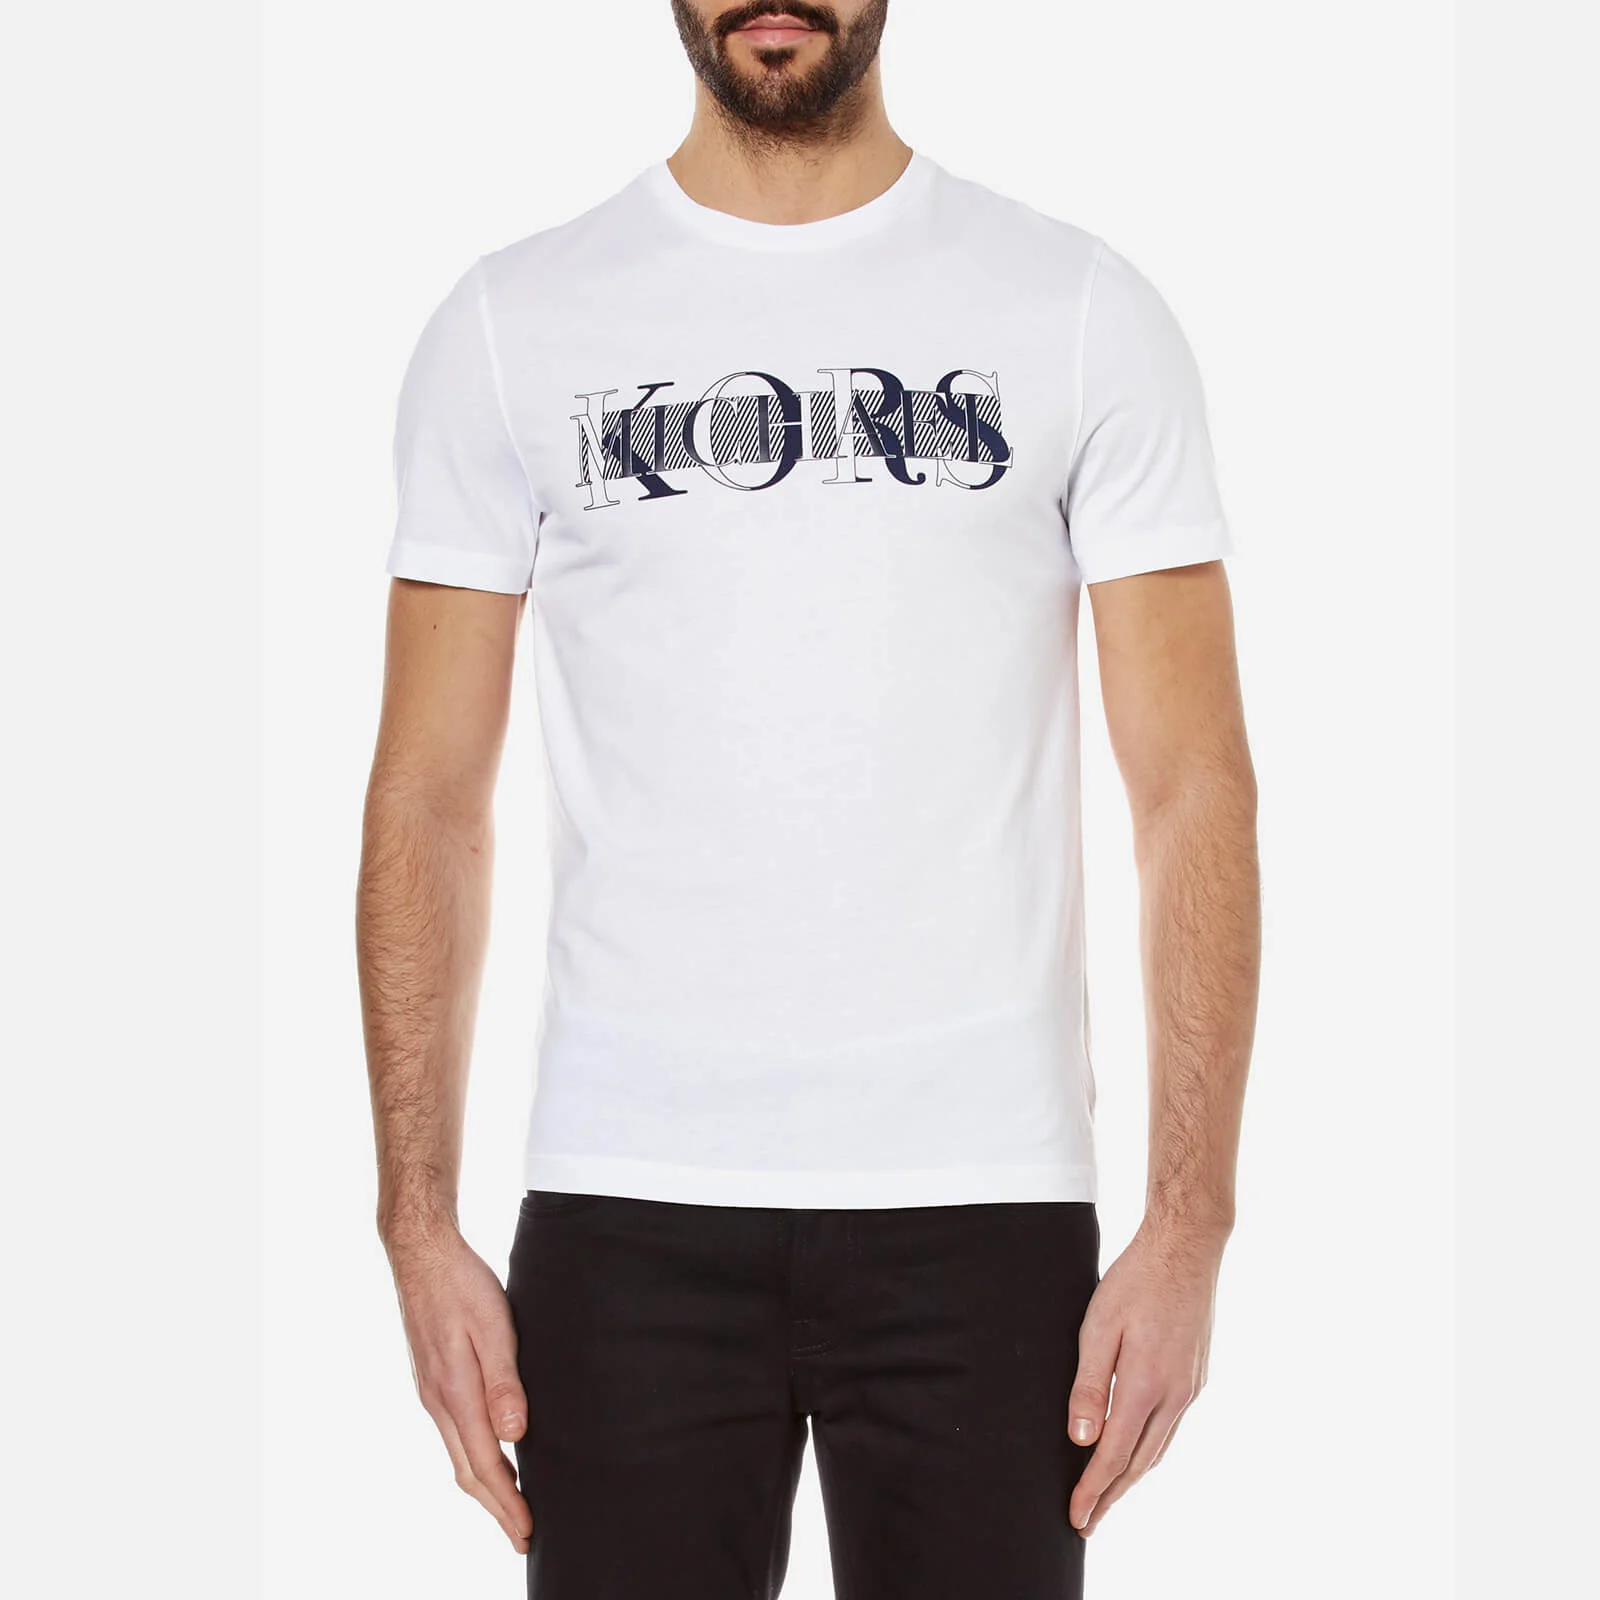 Michael Kors Men's Printed Kors Graphic T-Shirt - White Image 1